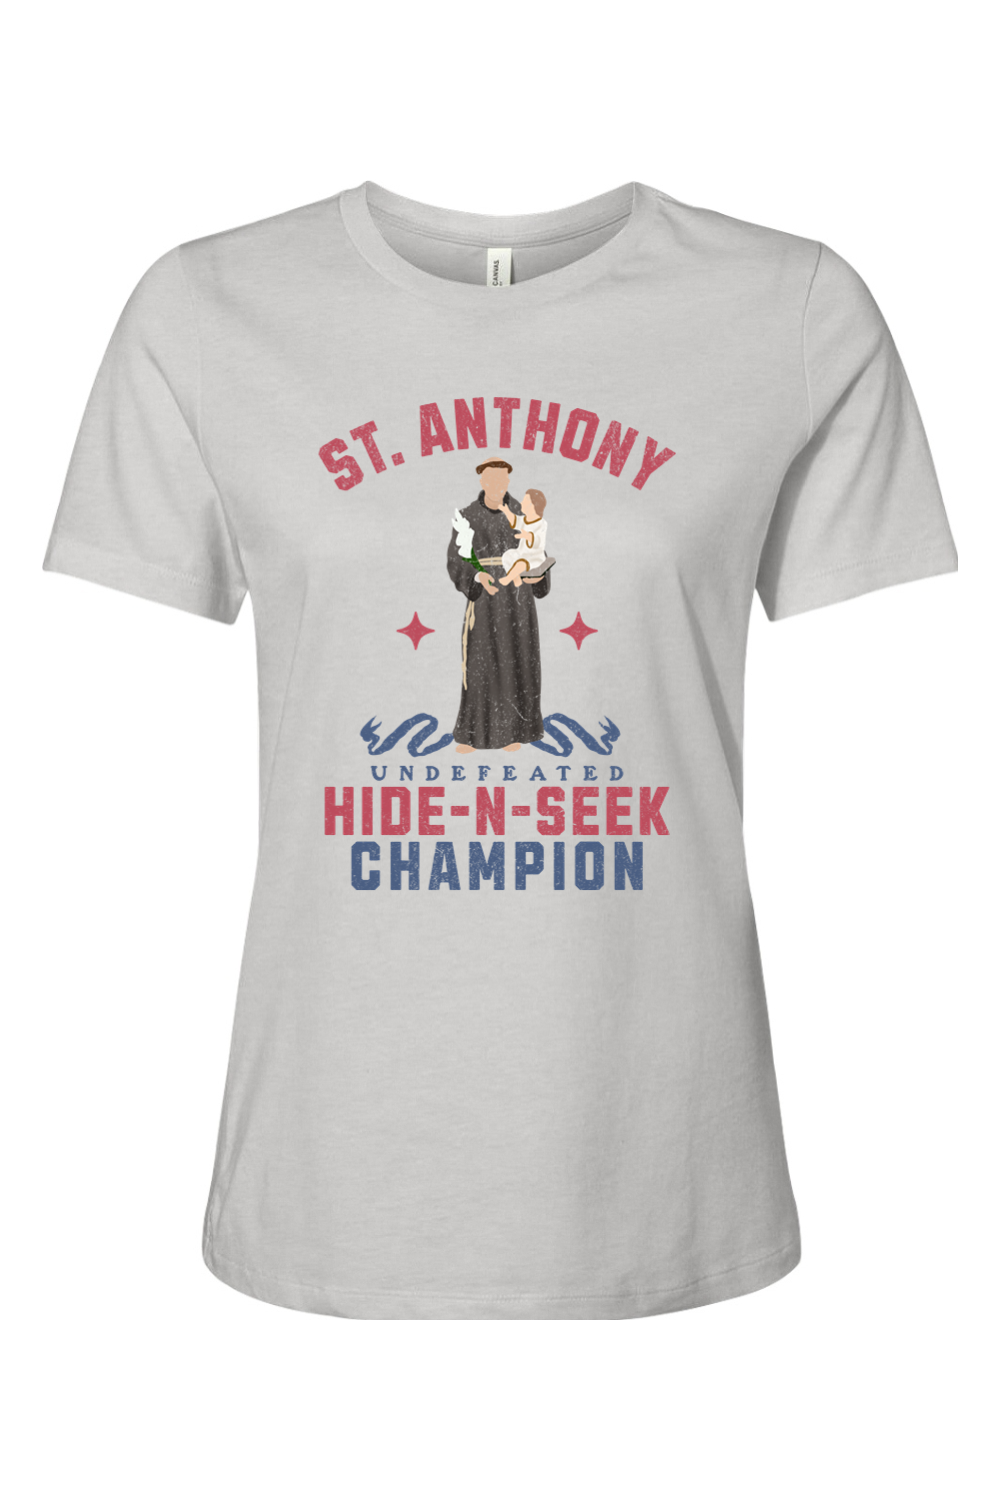 St. Anthony - Undefeated Hide -N- Seek Champion - Ladies Tee